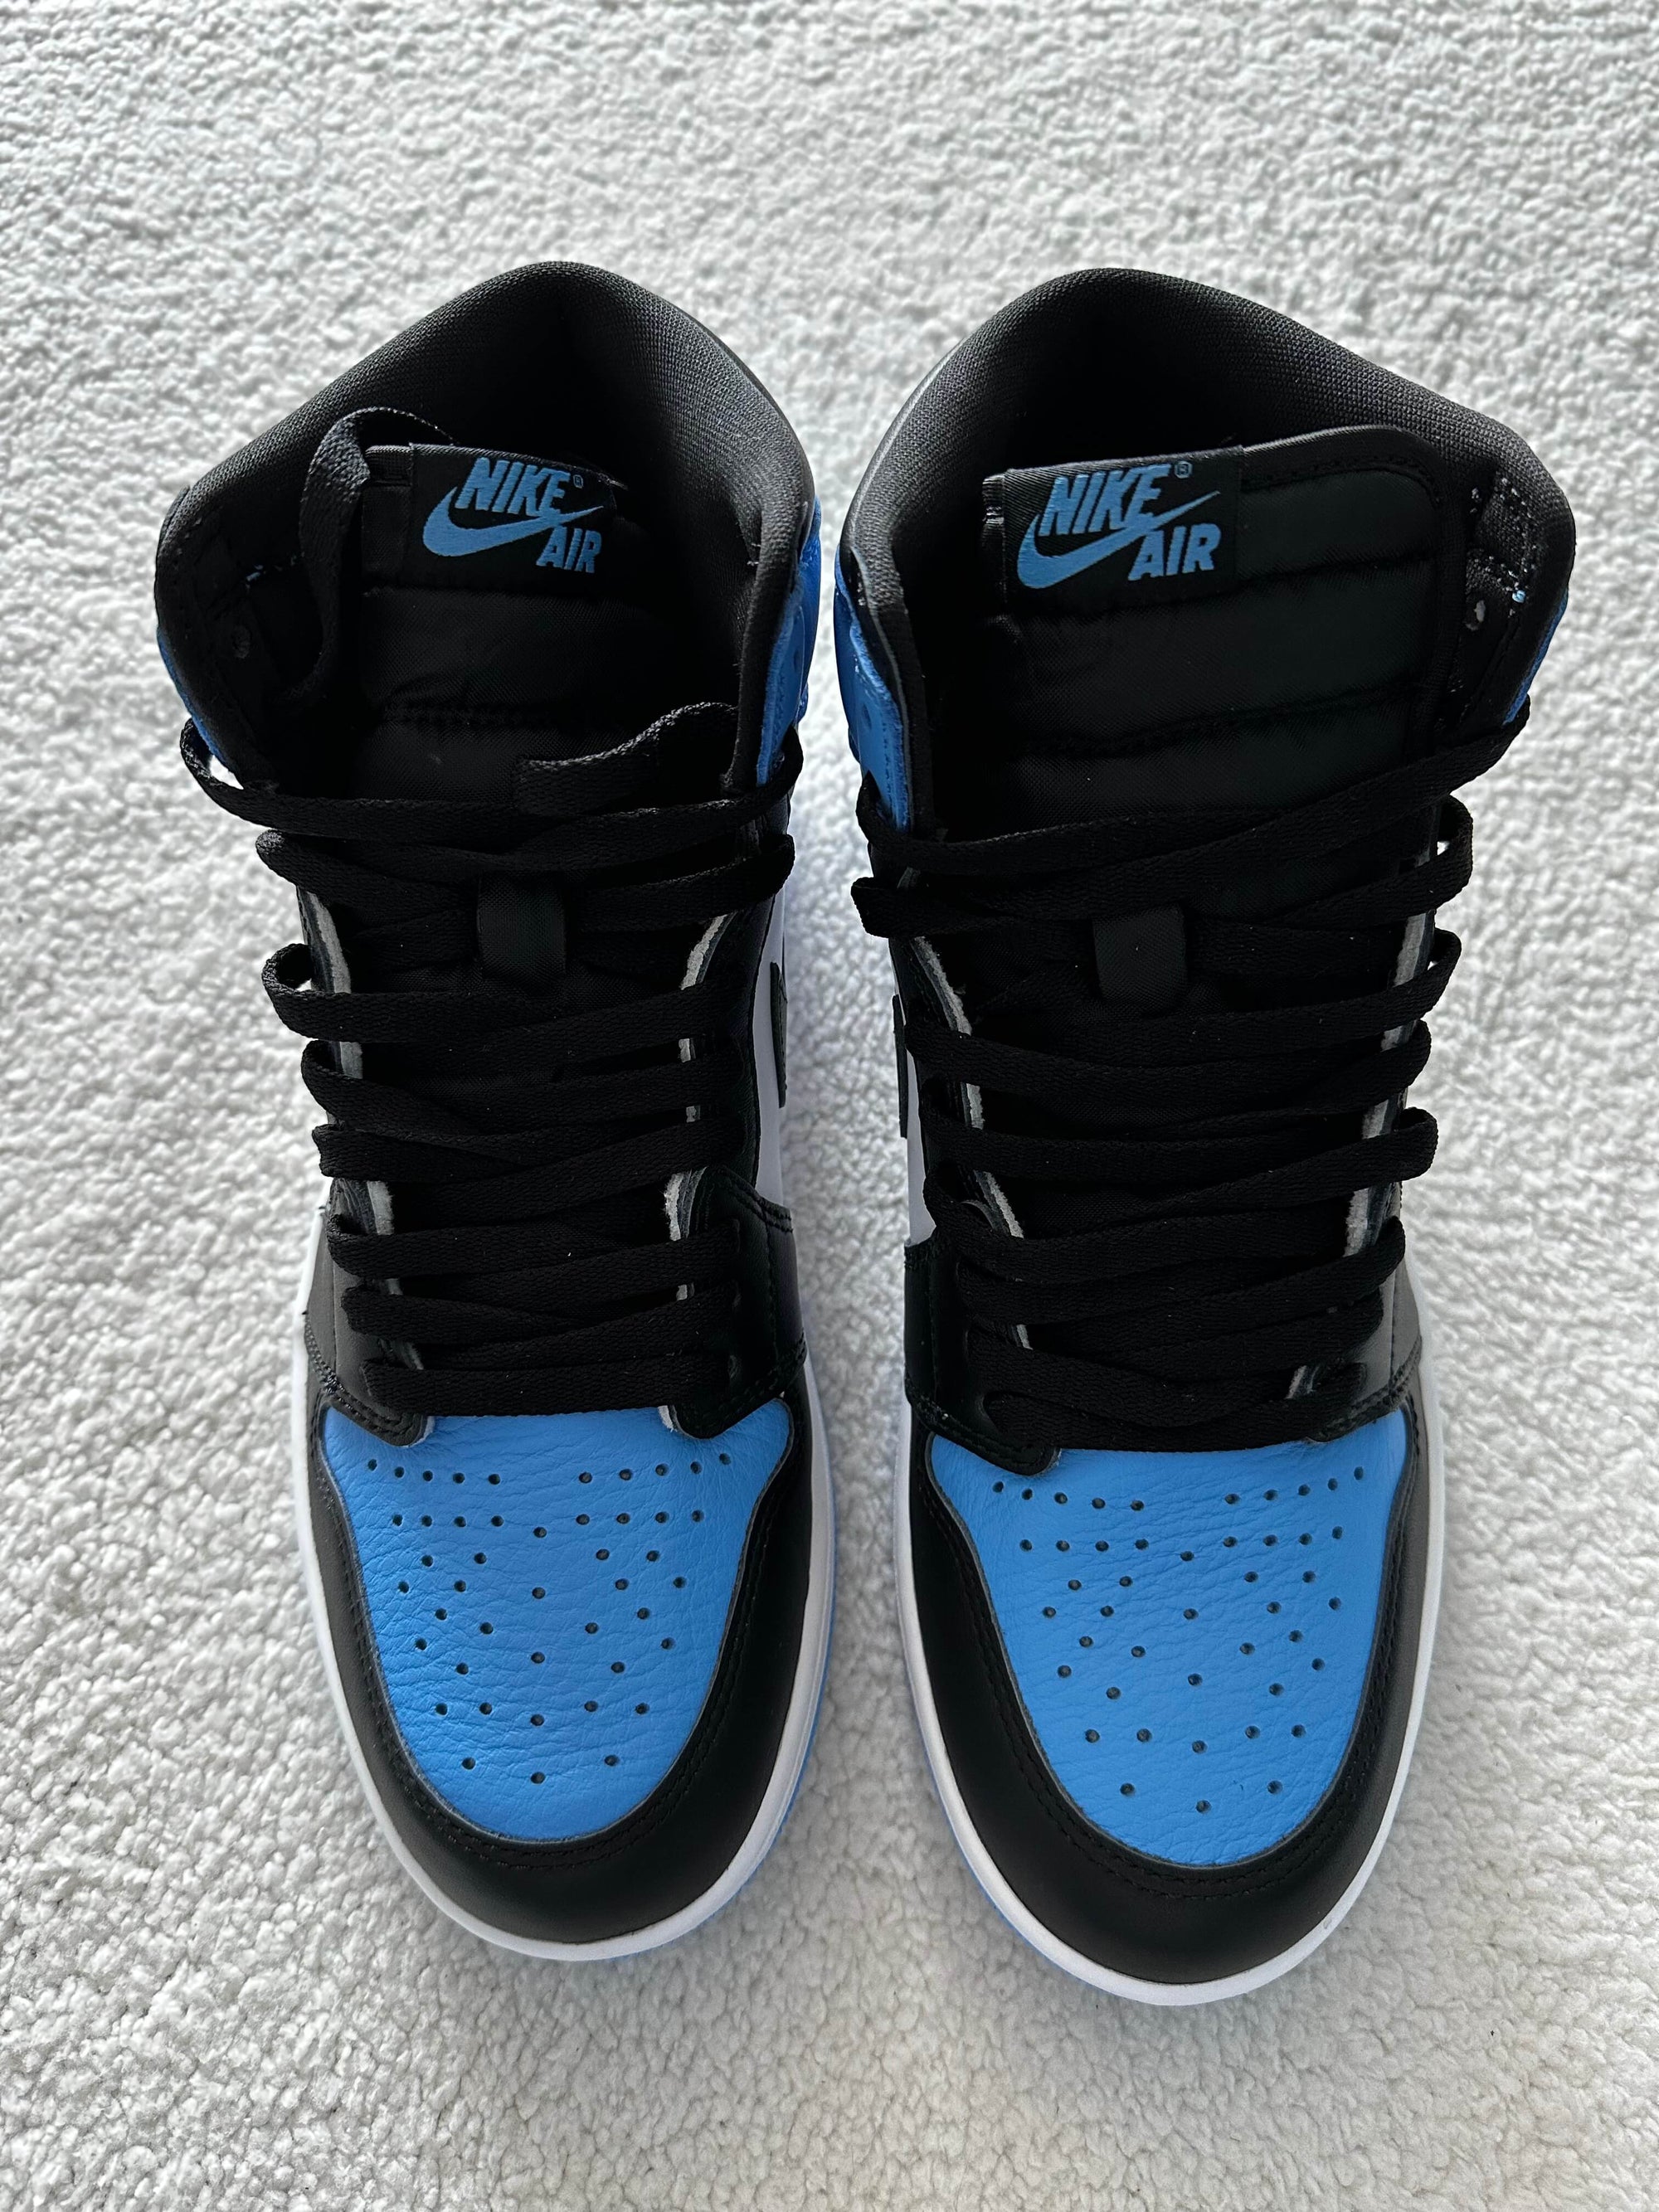 Sneakers Nike Air Jordan 1 High Retro OG. Talla 27 centimetros